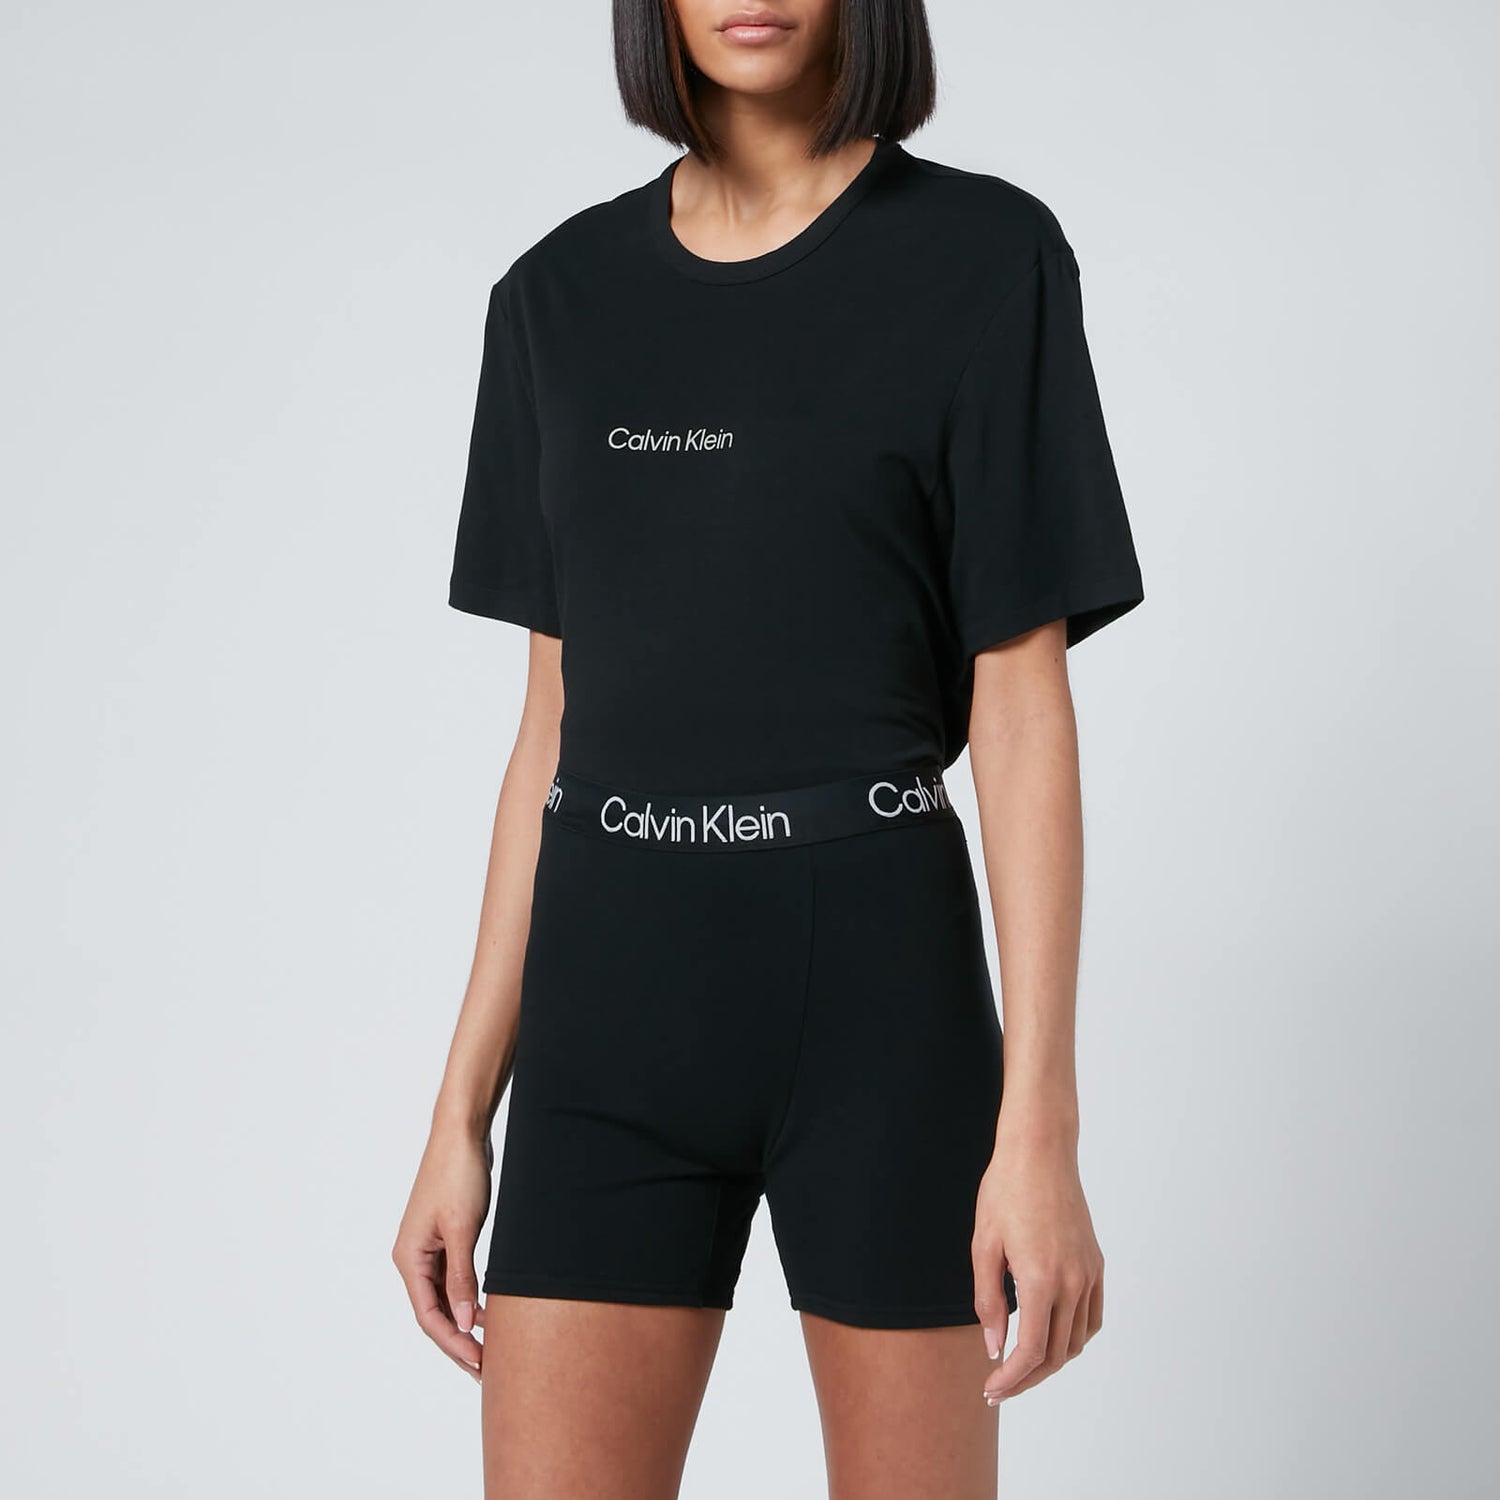 Calvin Klein Women's Short Sleeve T-Shirt And Shorts Set - Black - XS